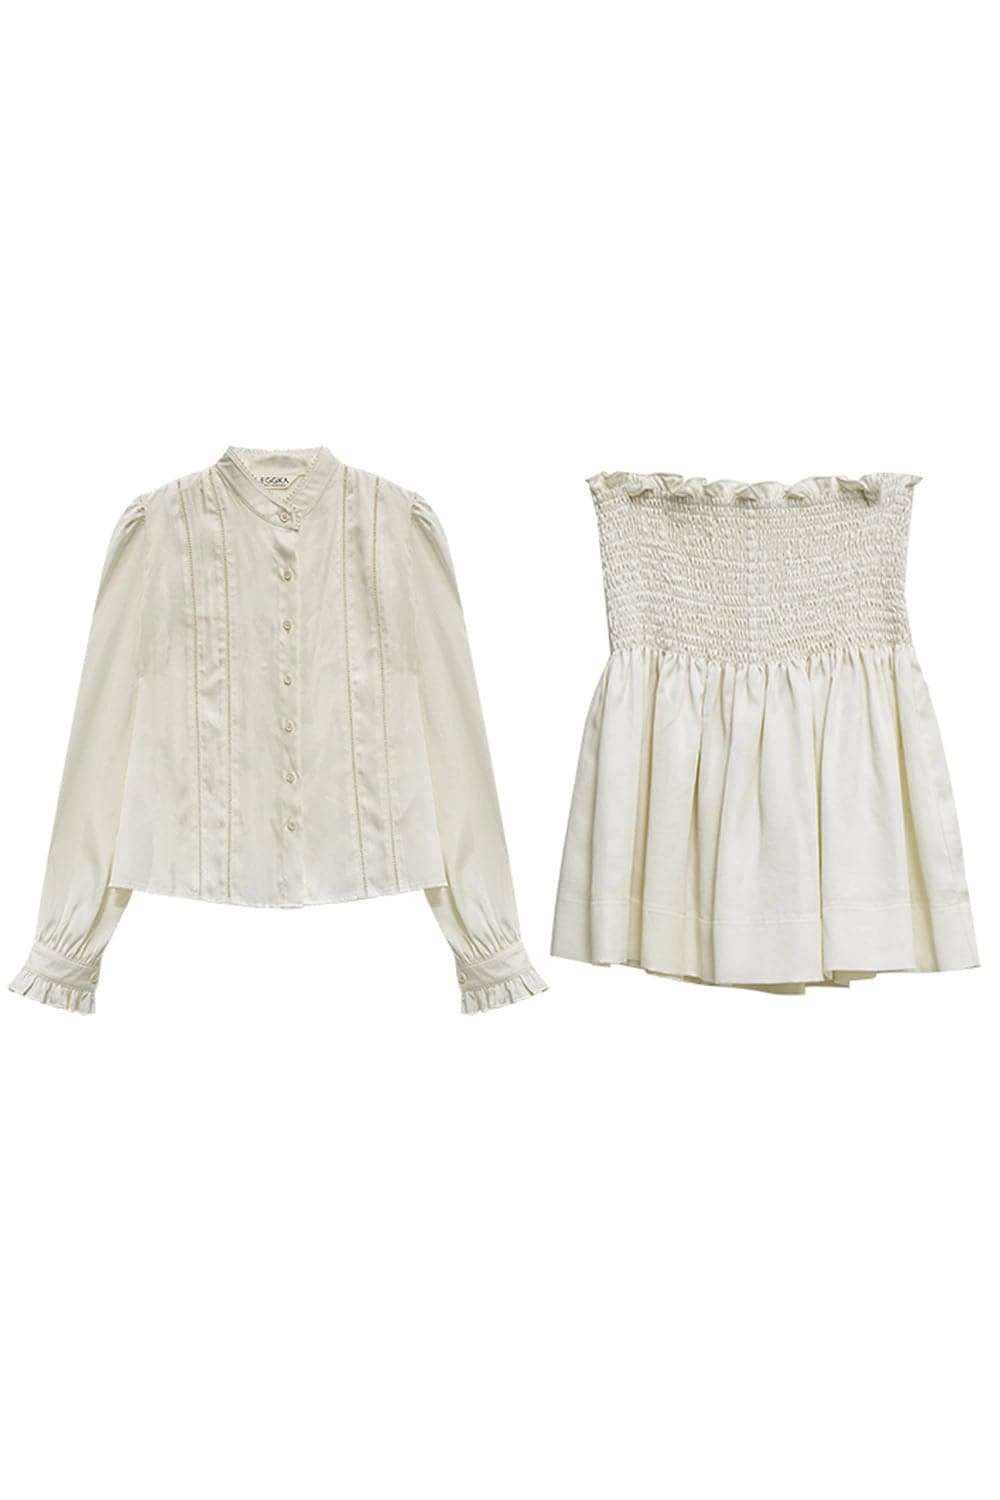 Chic Smocked Waist Skirt & Vintage Button-Up Blouse Set